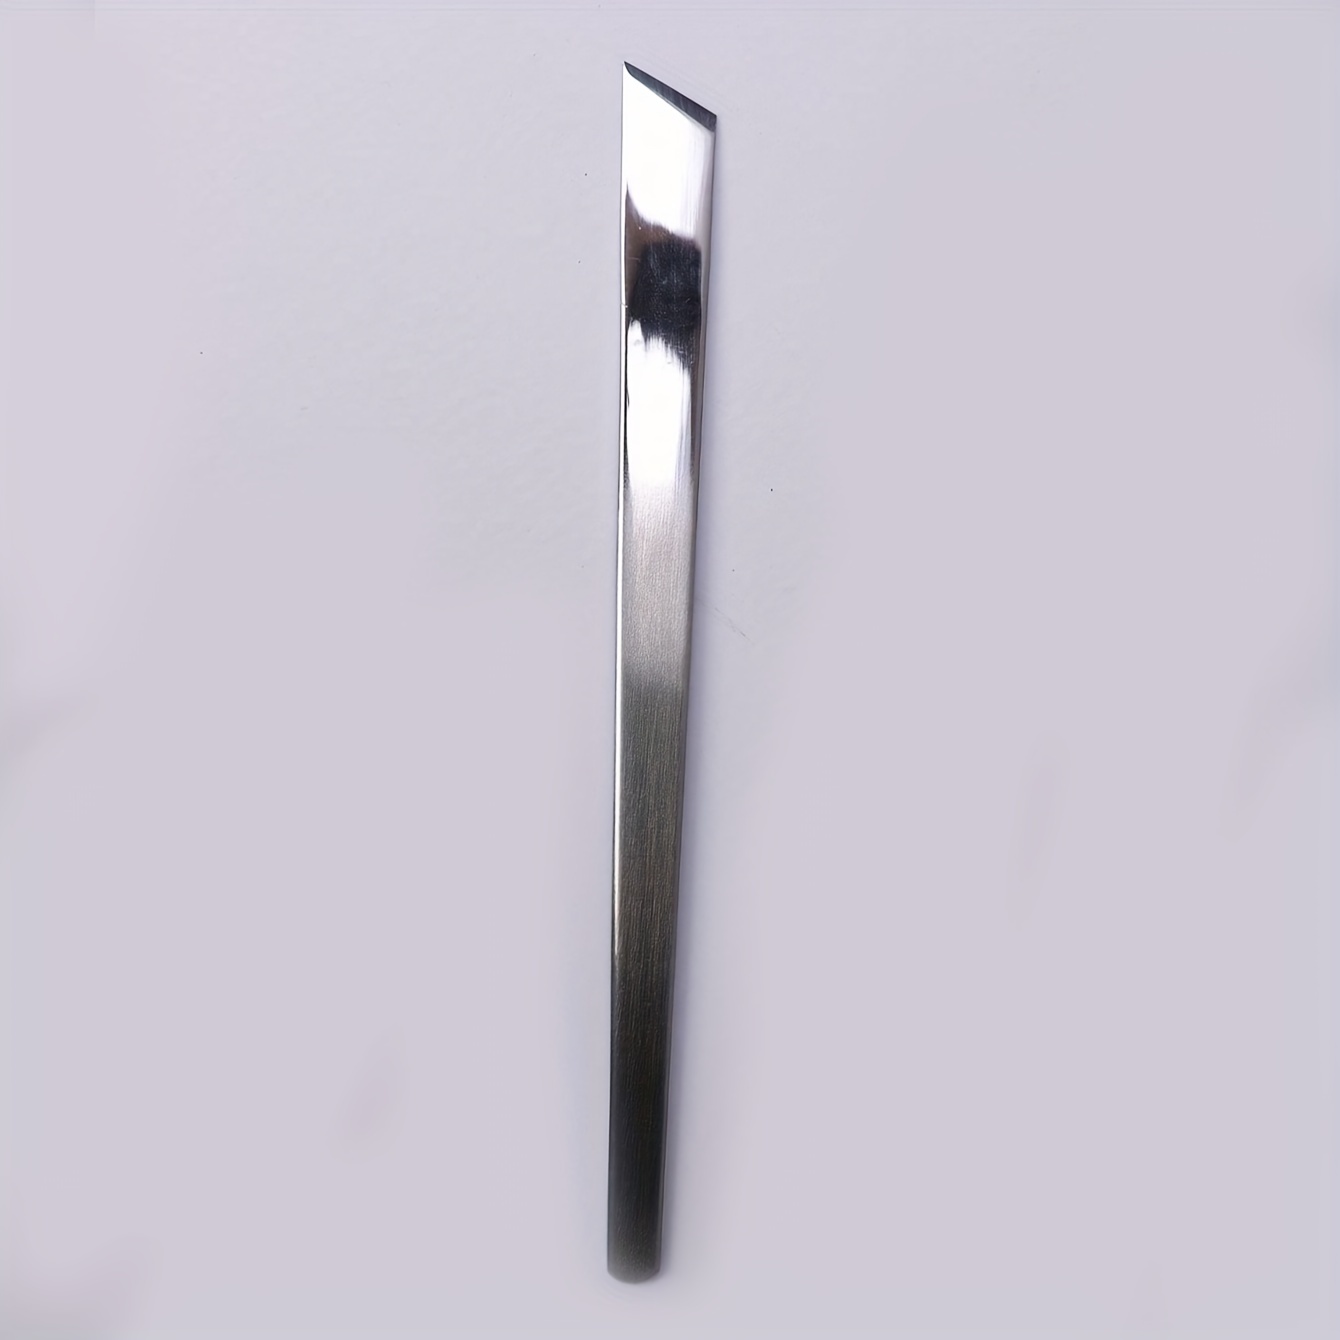 Stainless Steel Pedicure Scrapers Callus Knife Pedicure - Temu